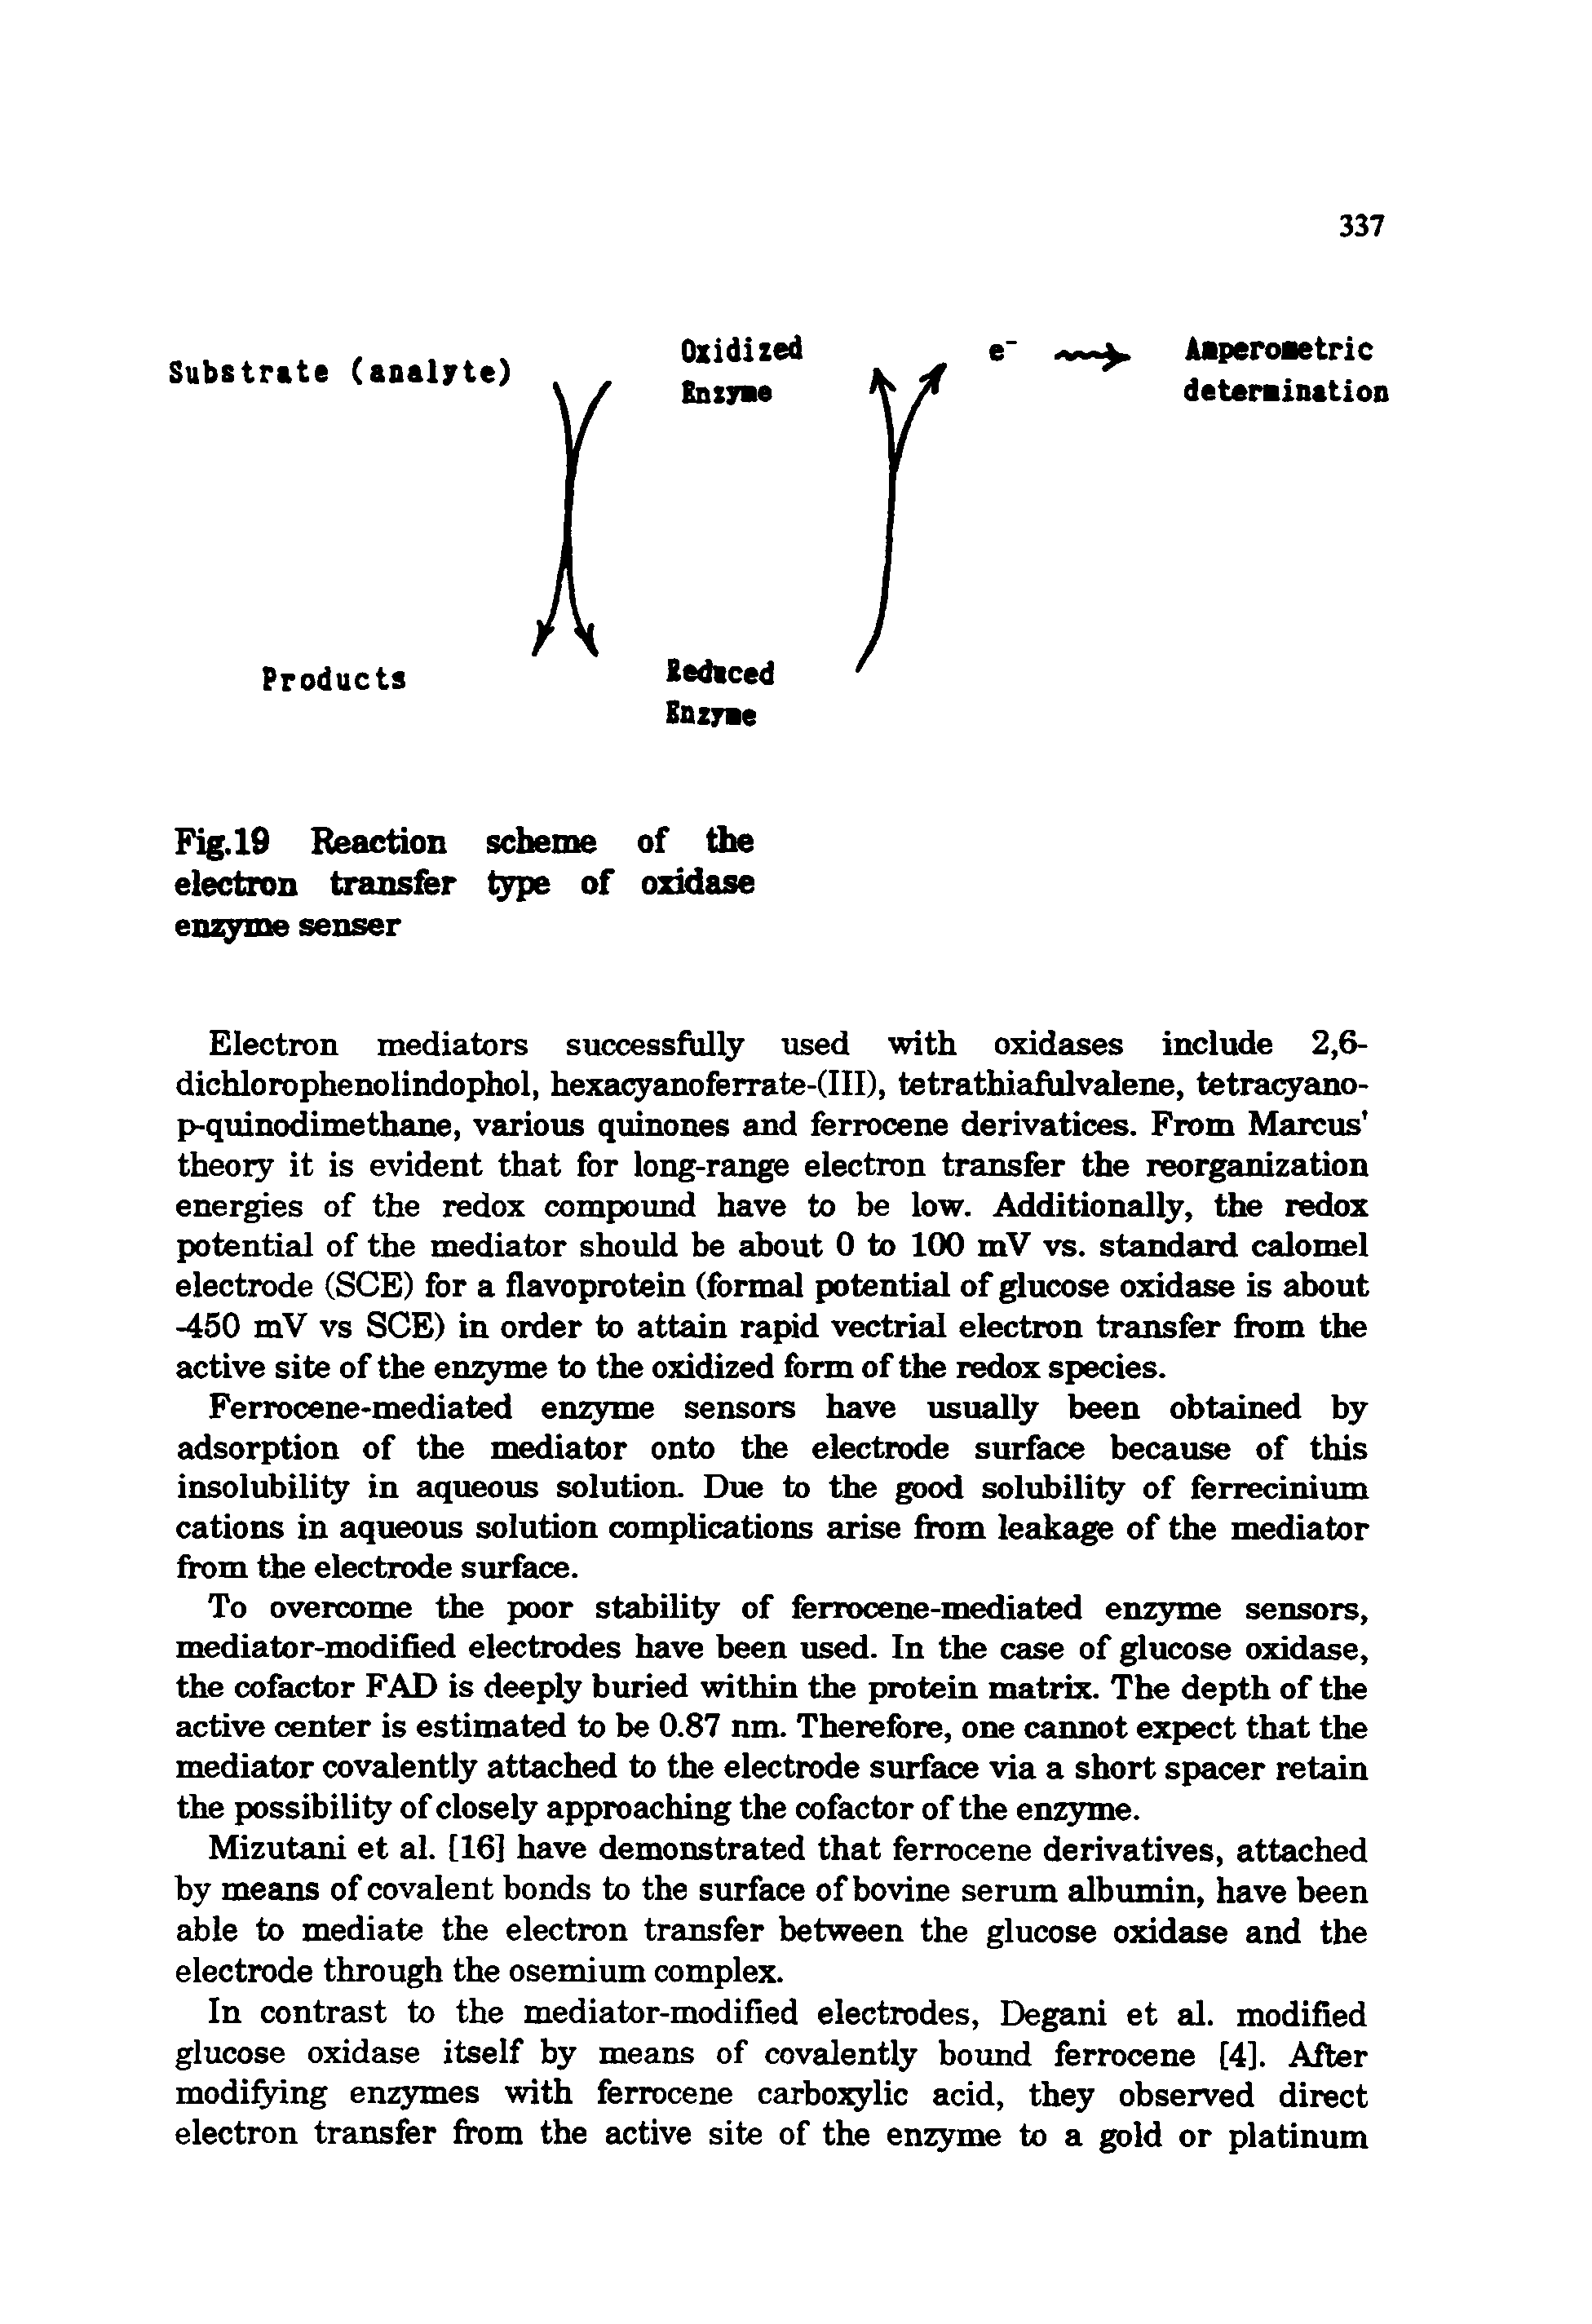 Fig. 19 Reaction scheme of the electron transfer type of oxidase enzyme senser...